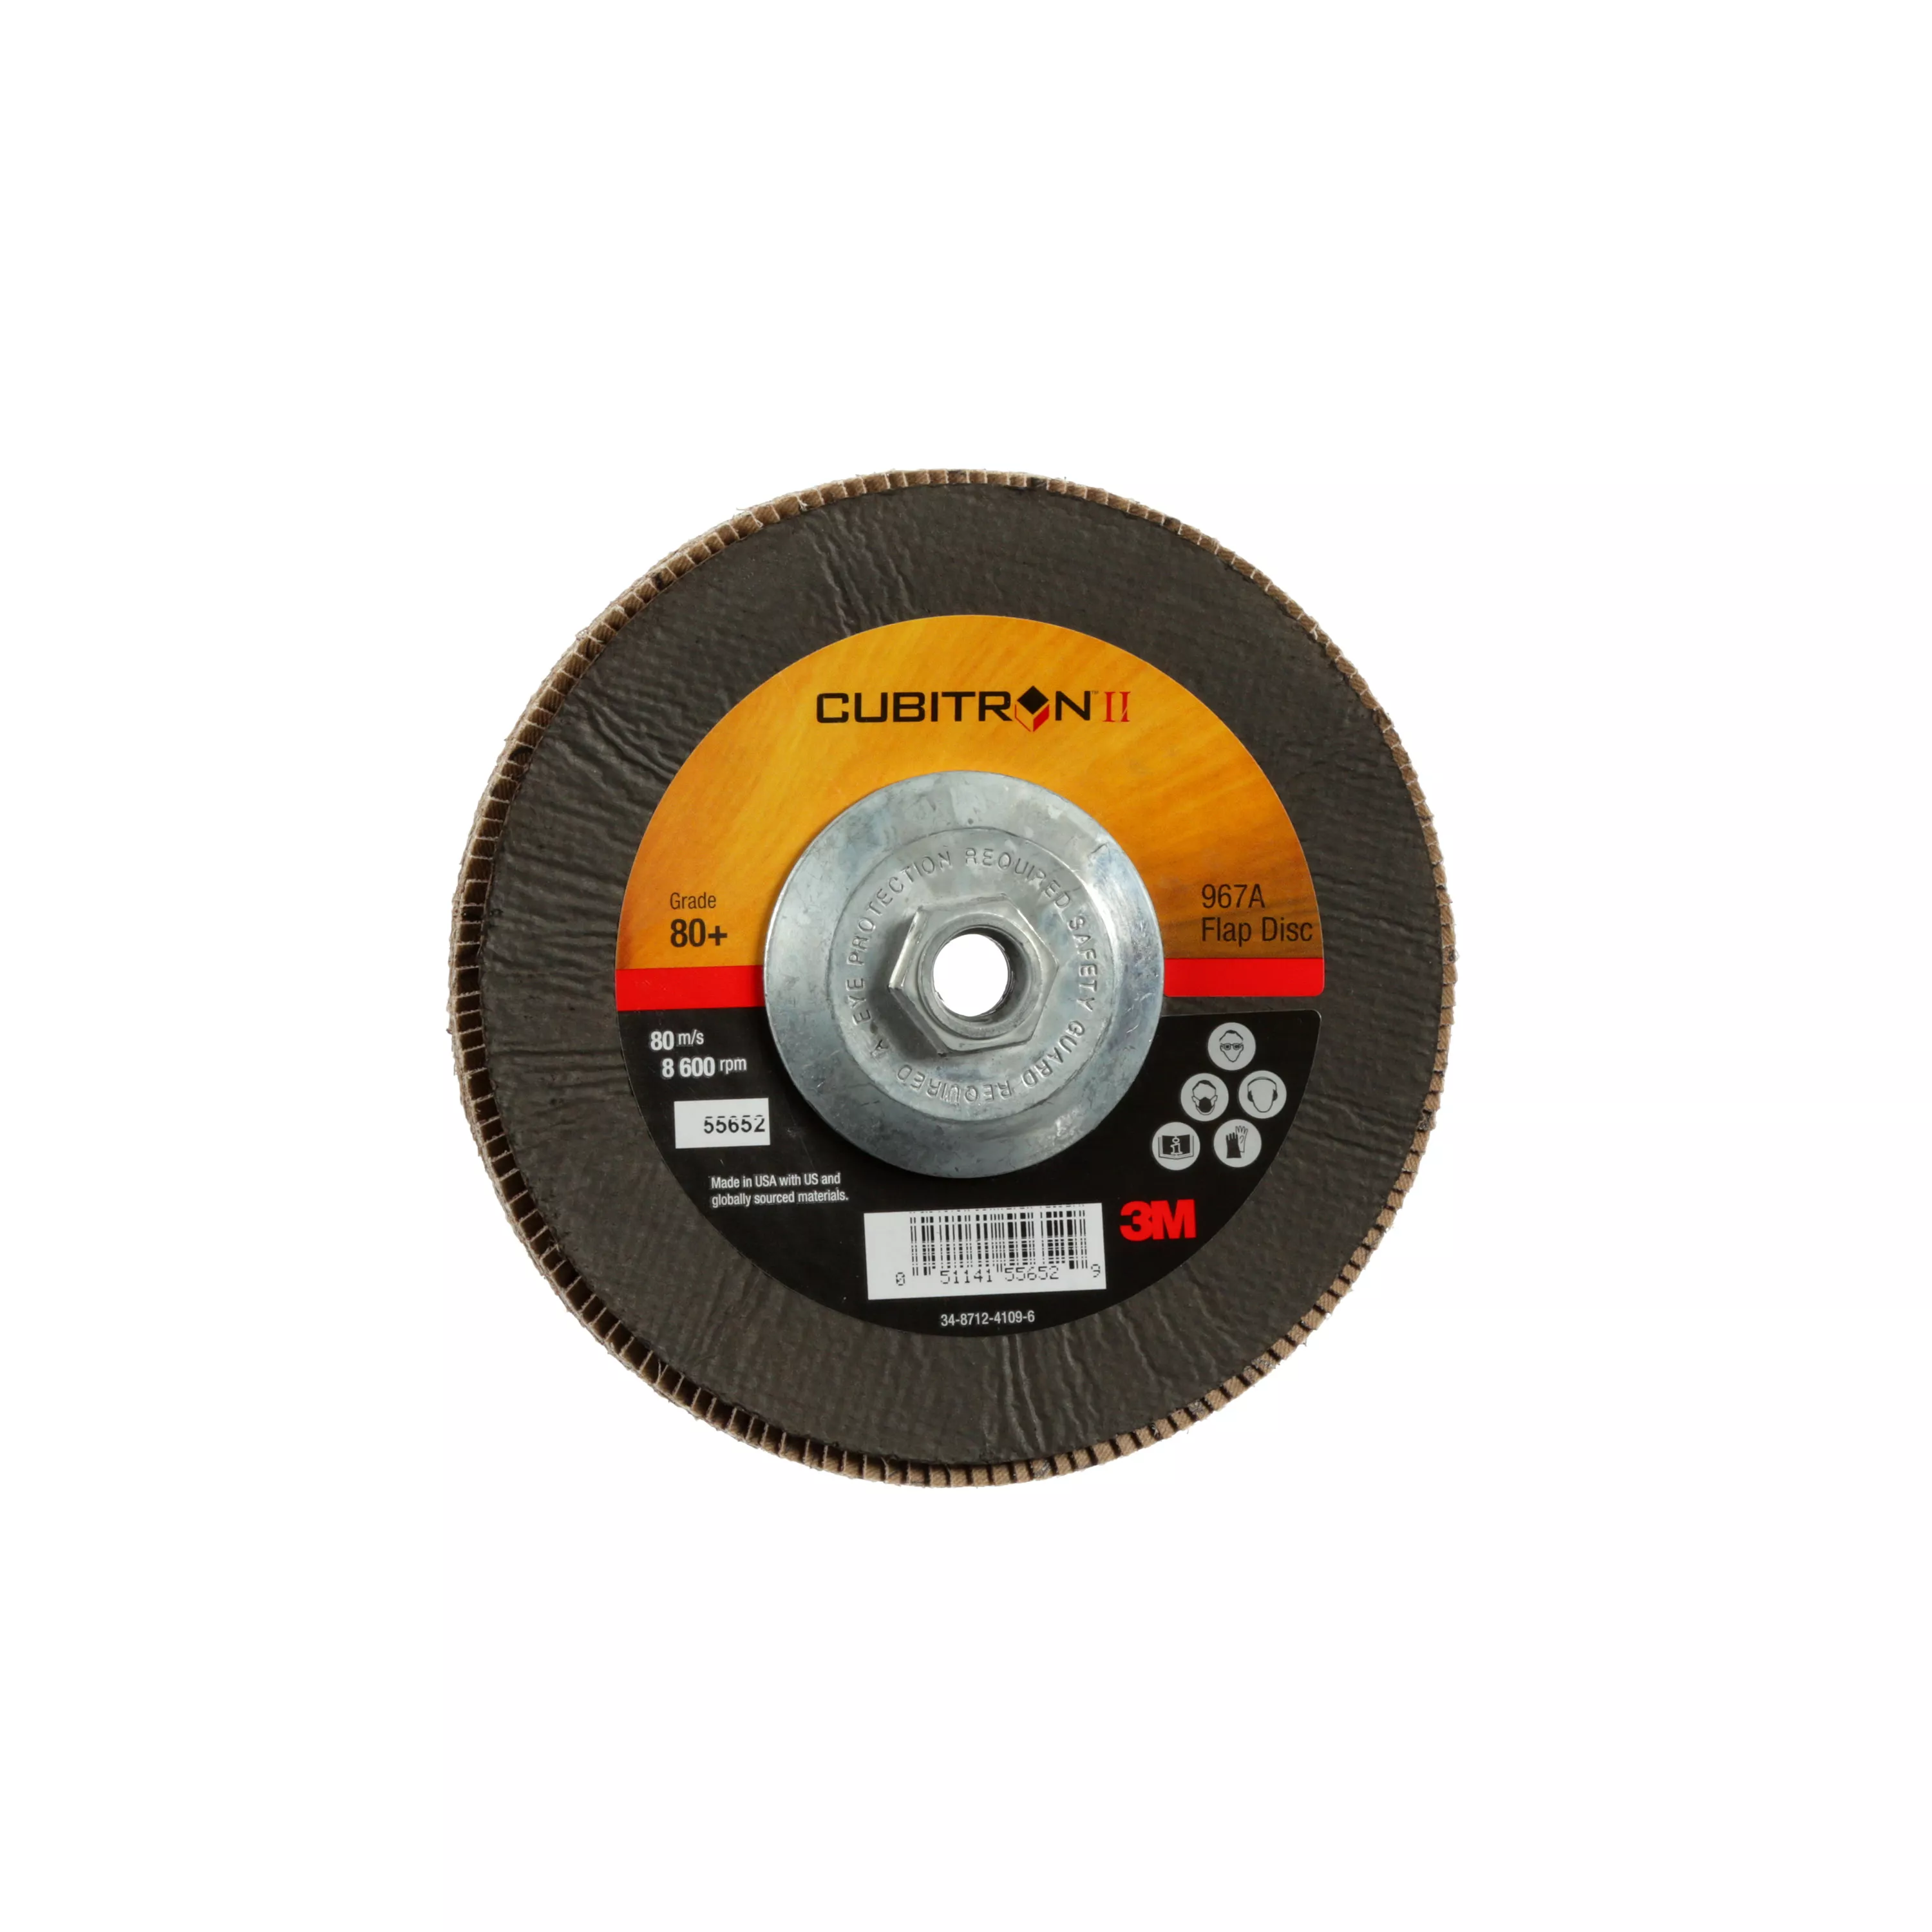 3M™ Cubitron™ II Flap Disc 967A, 80+, T29 Quick Change, 7 in x 5/8